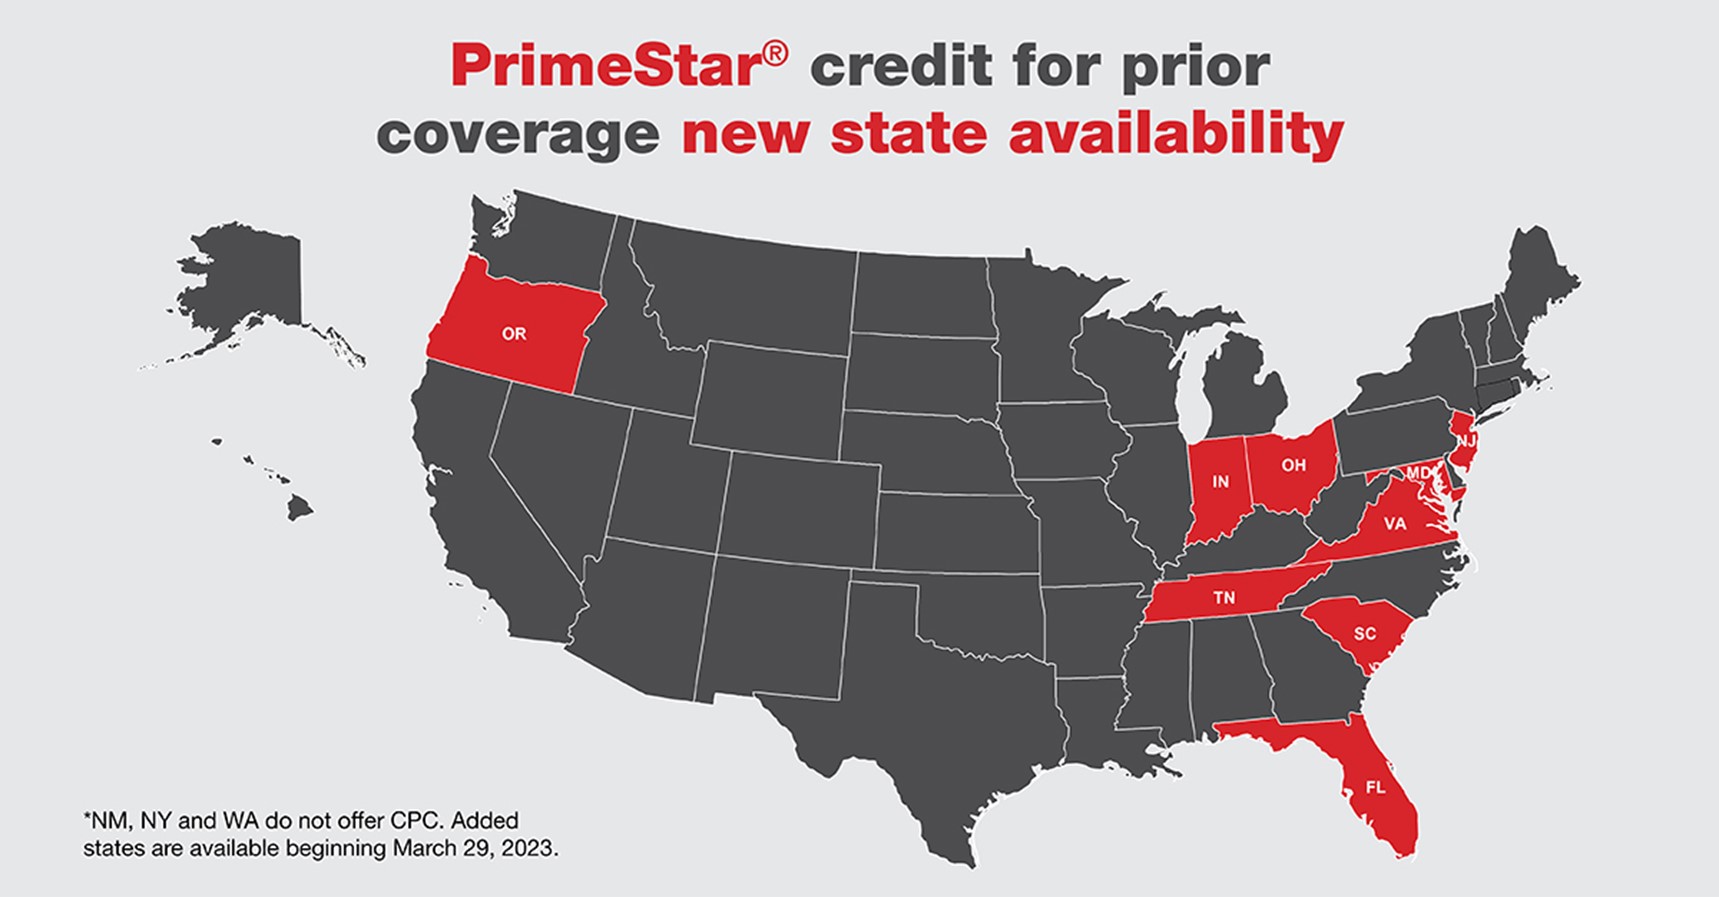 Ameritas PrimeStar credit for prior coverage new state availability image